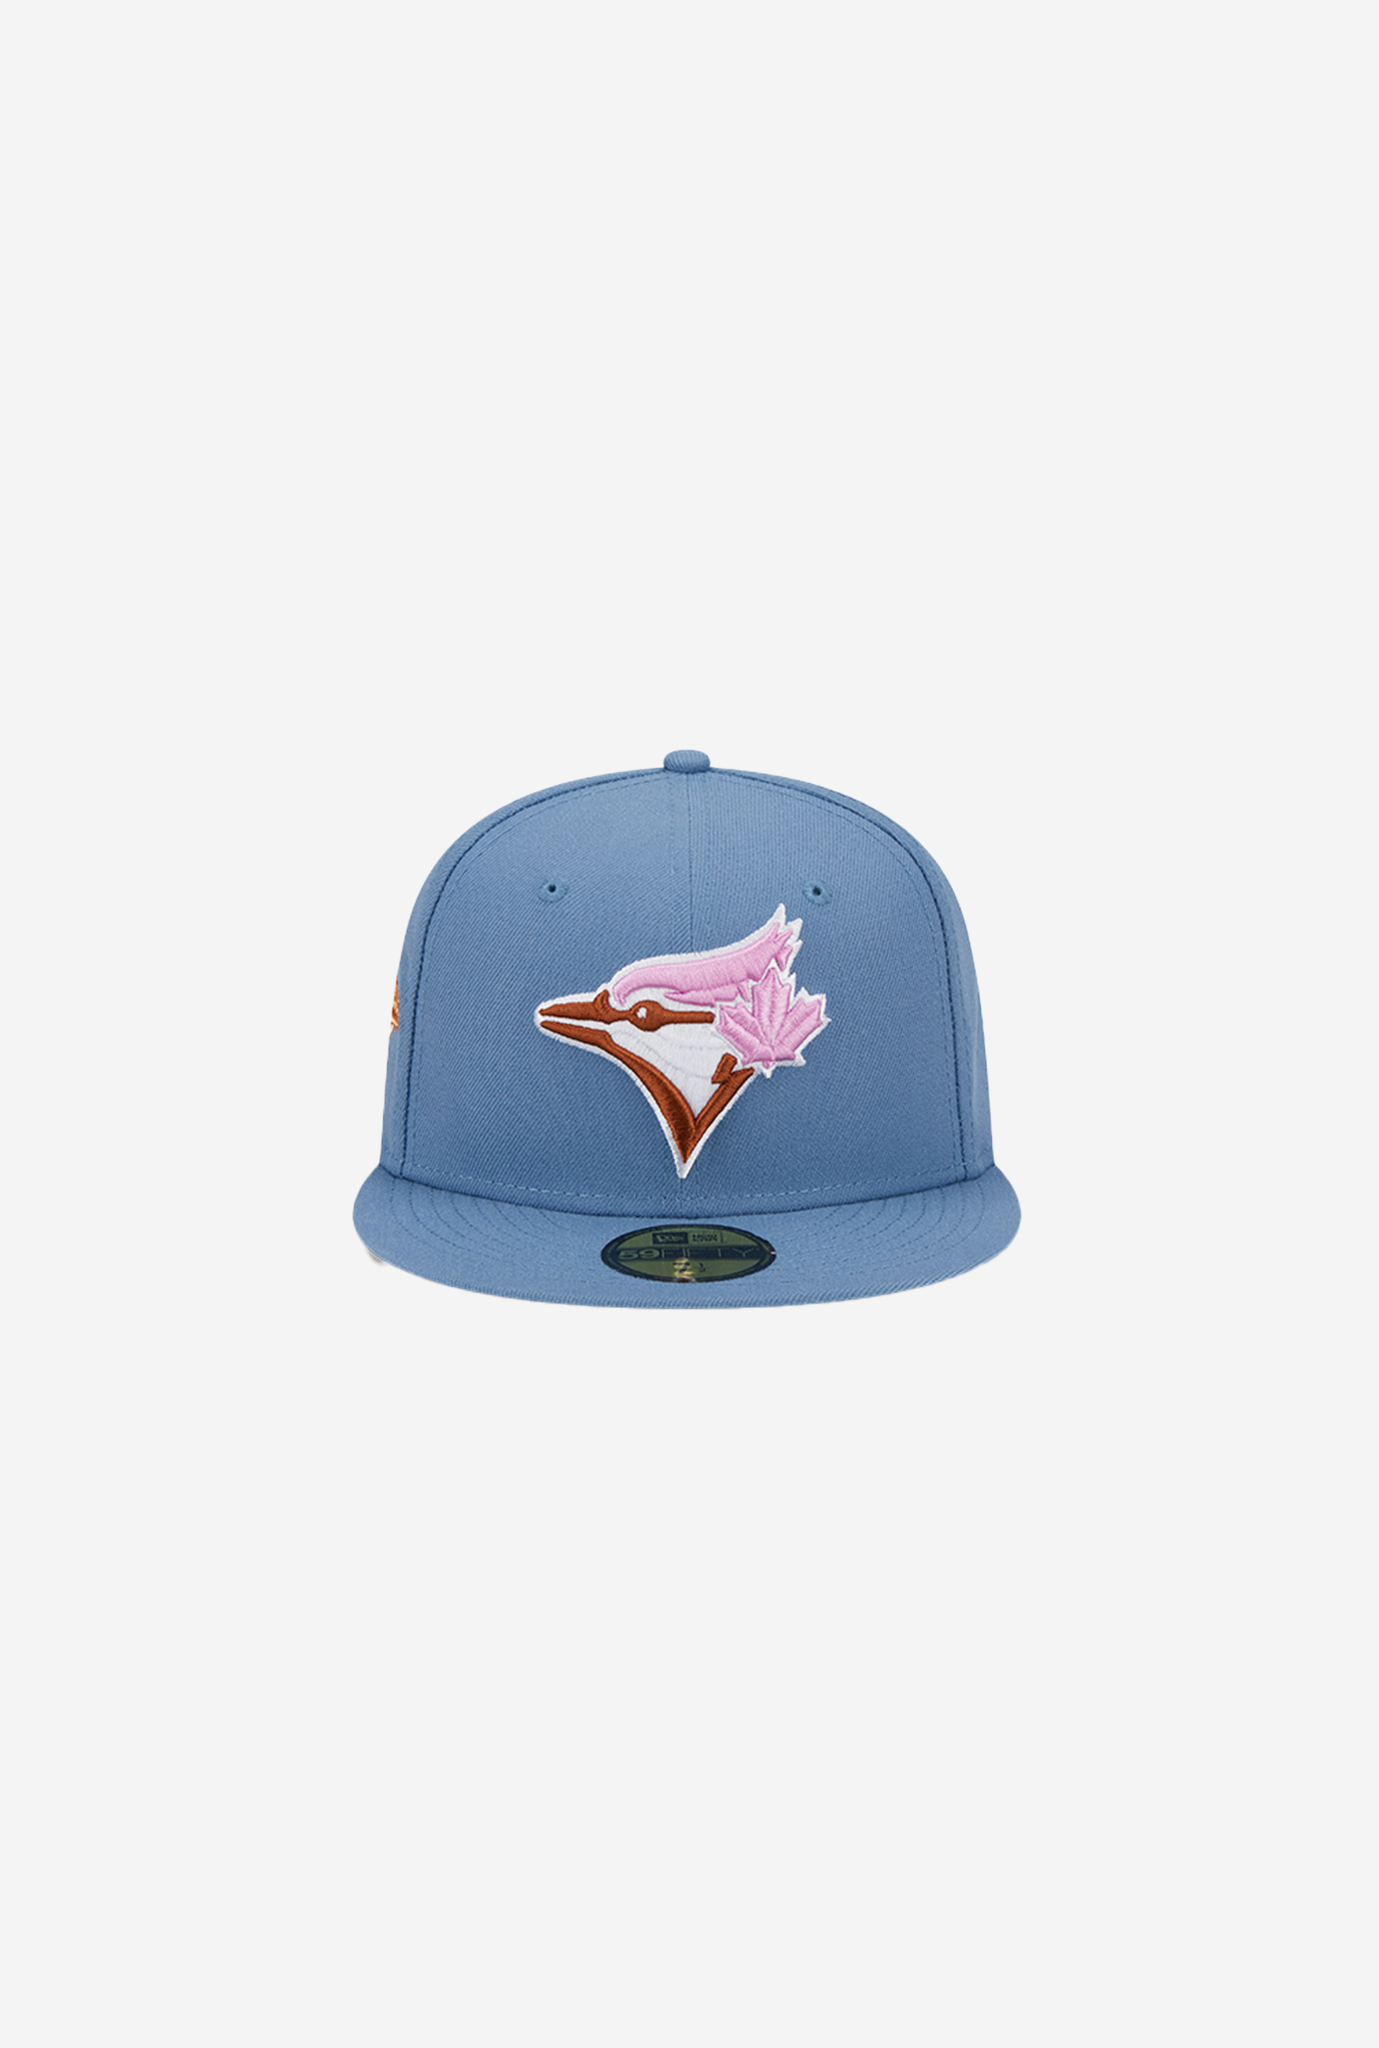 Toronto Blue Jays Color Pack 59FIFTY Cap - Blue/Pink